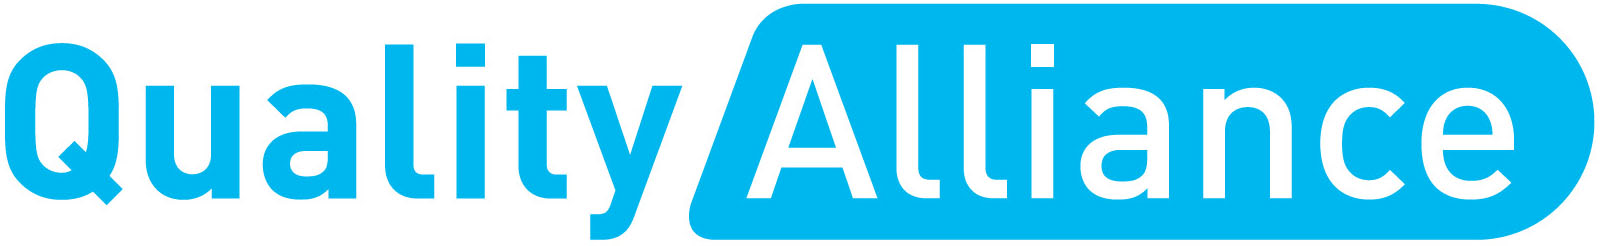 Quality alliance logo